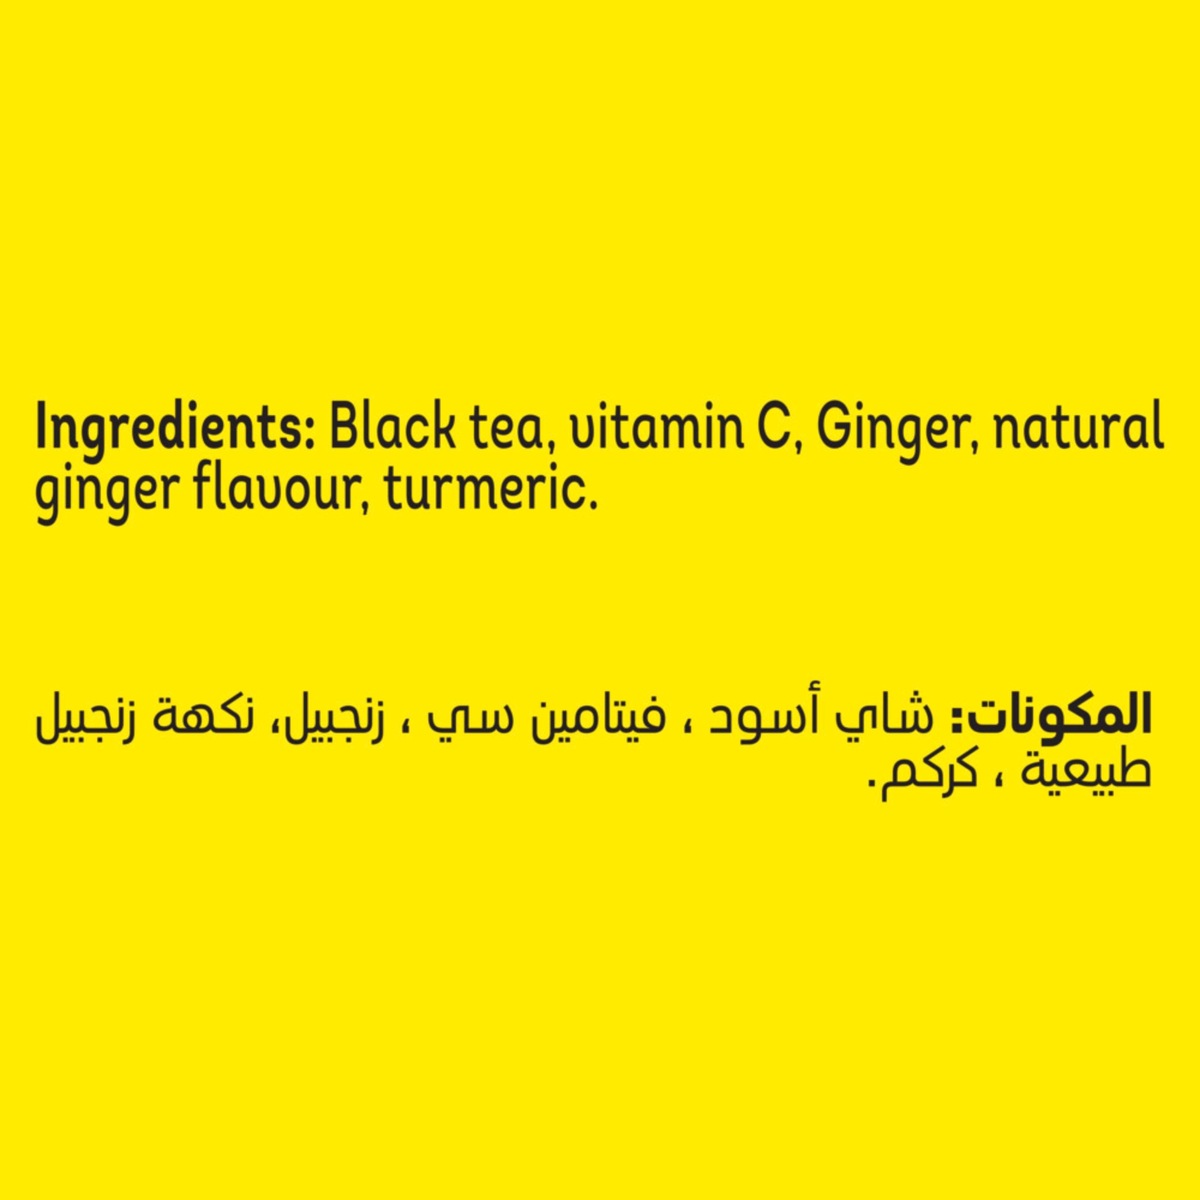 Lipton Yellow Label Daily Care Turmeric & Ginger Black Tea 25 Teabags